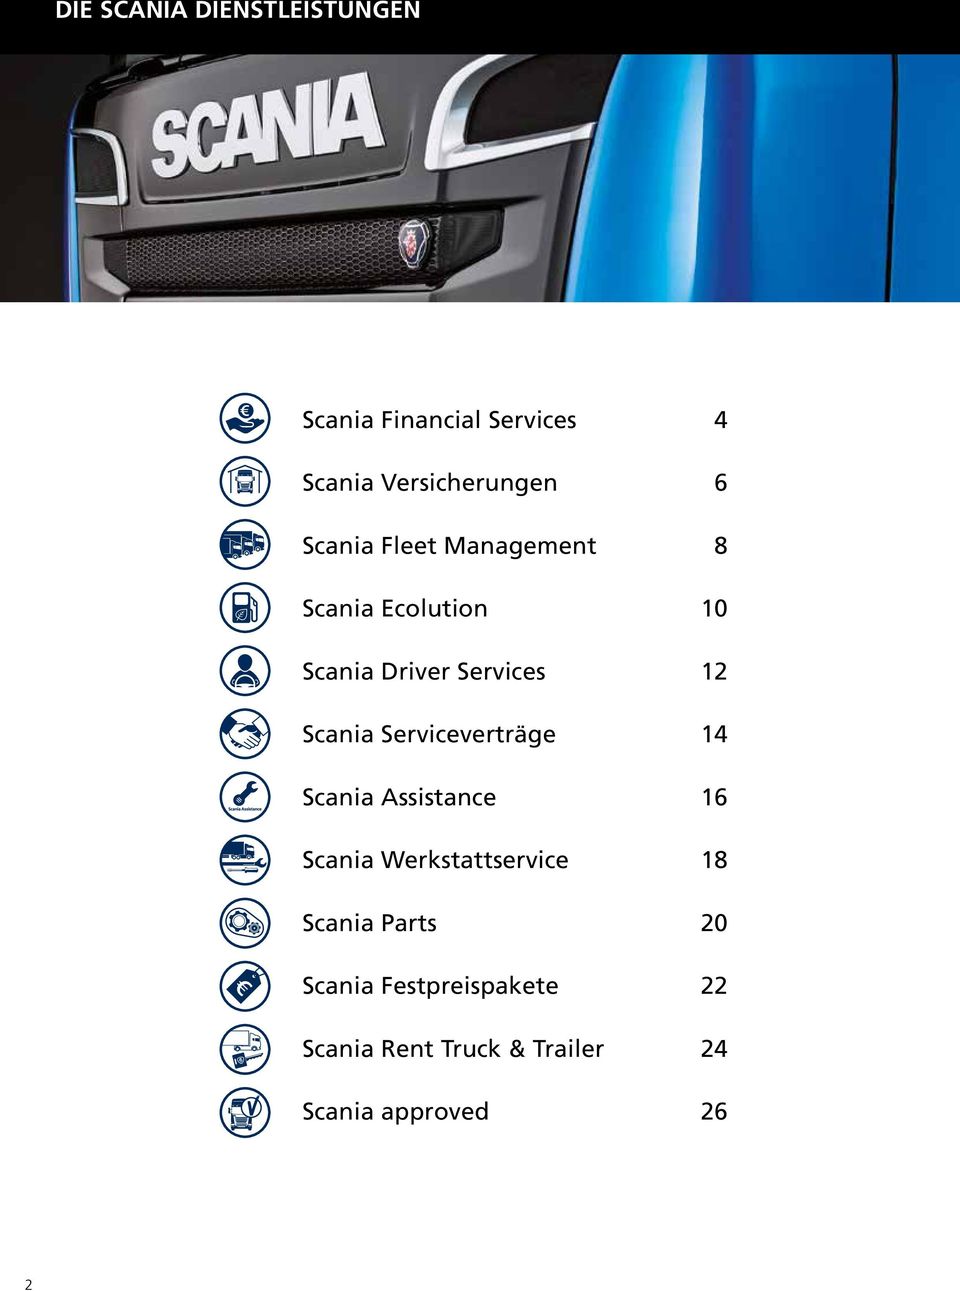 Serviceverträge 14 Scania Assistance 16 Scania Werkstattservice 18 Scania Parts